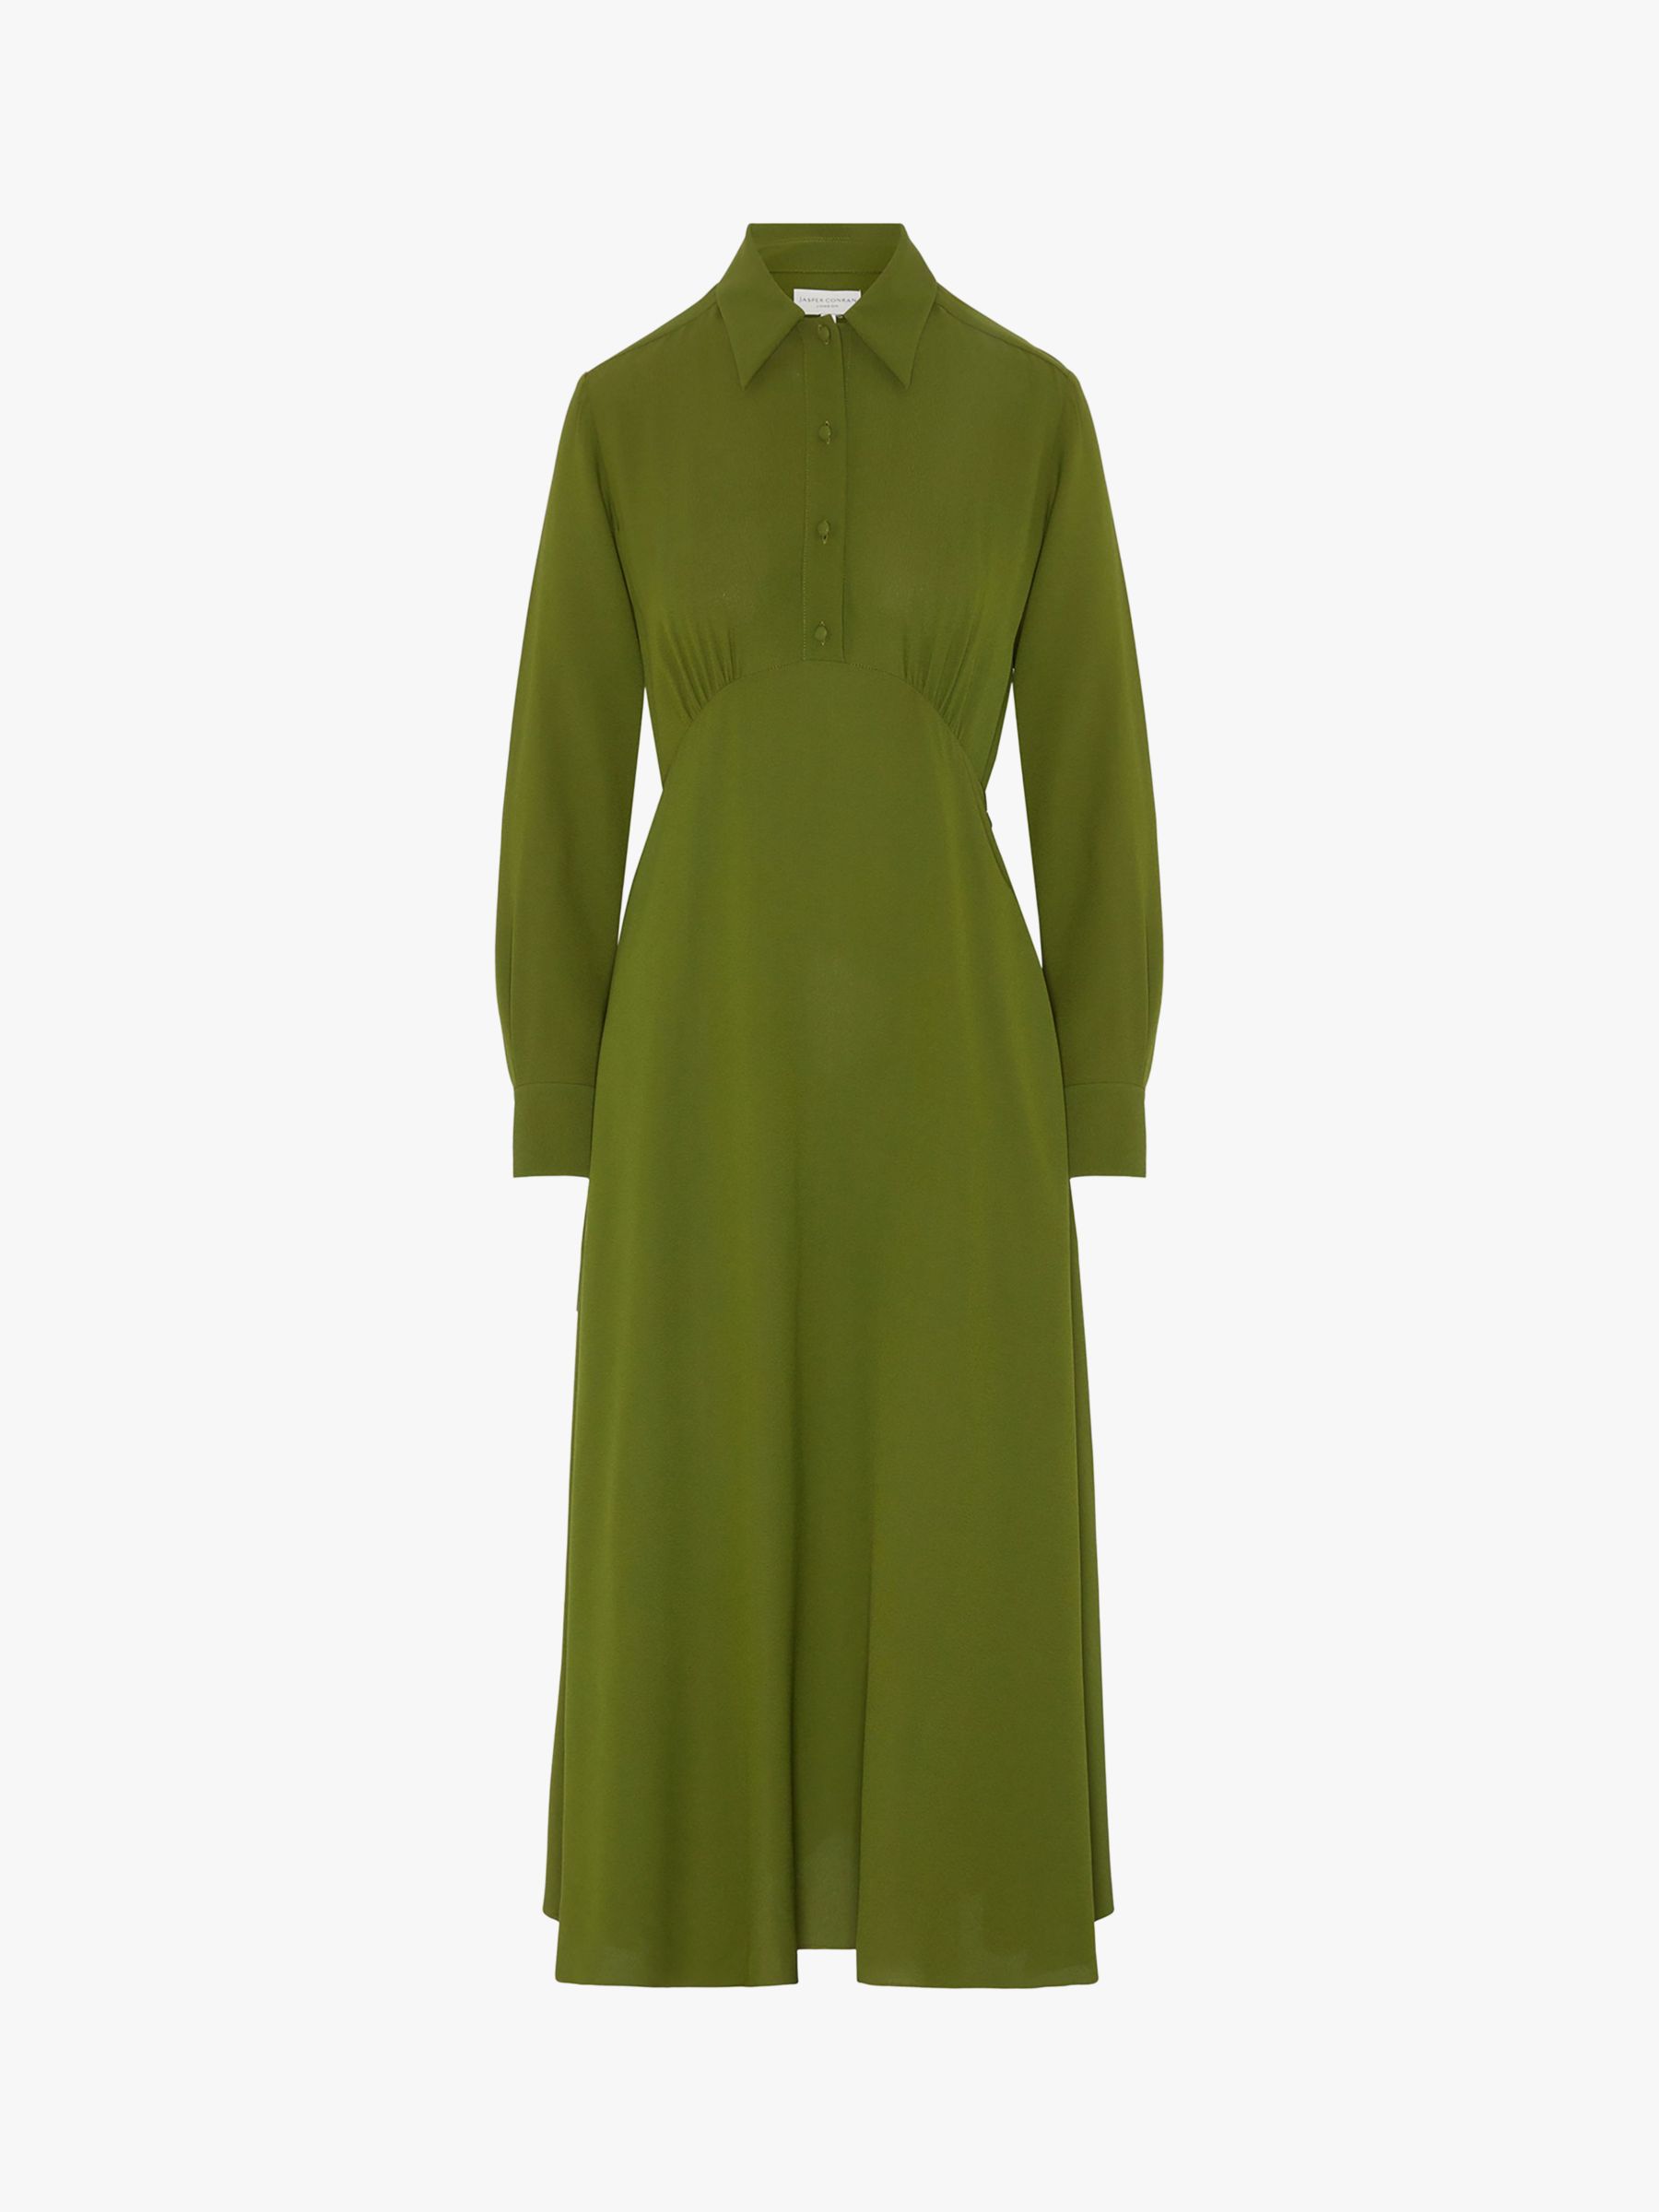 Jasper Conran Claudia Empire Line Crepe Midi Dress, Green at John Lewis ...